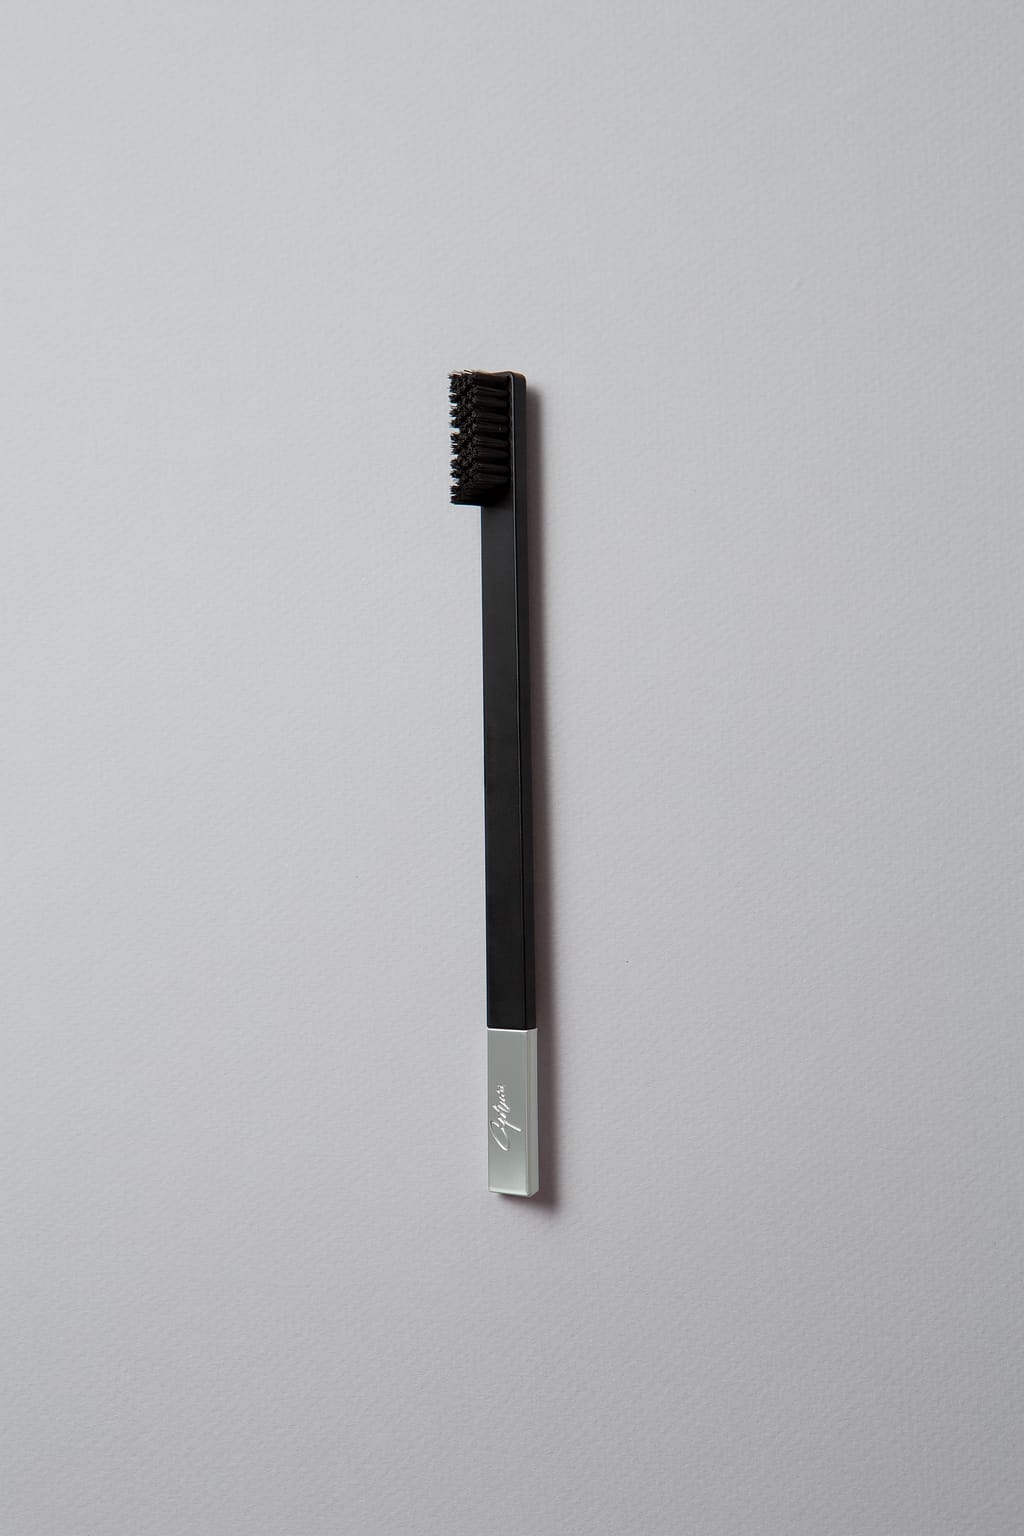 Black Silver designer toothbrush SLIM by Apriori